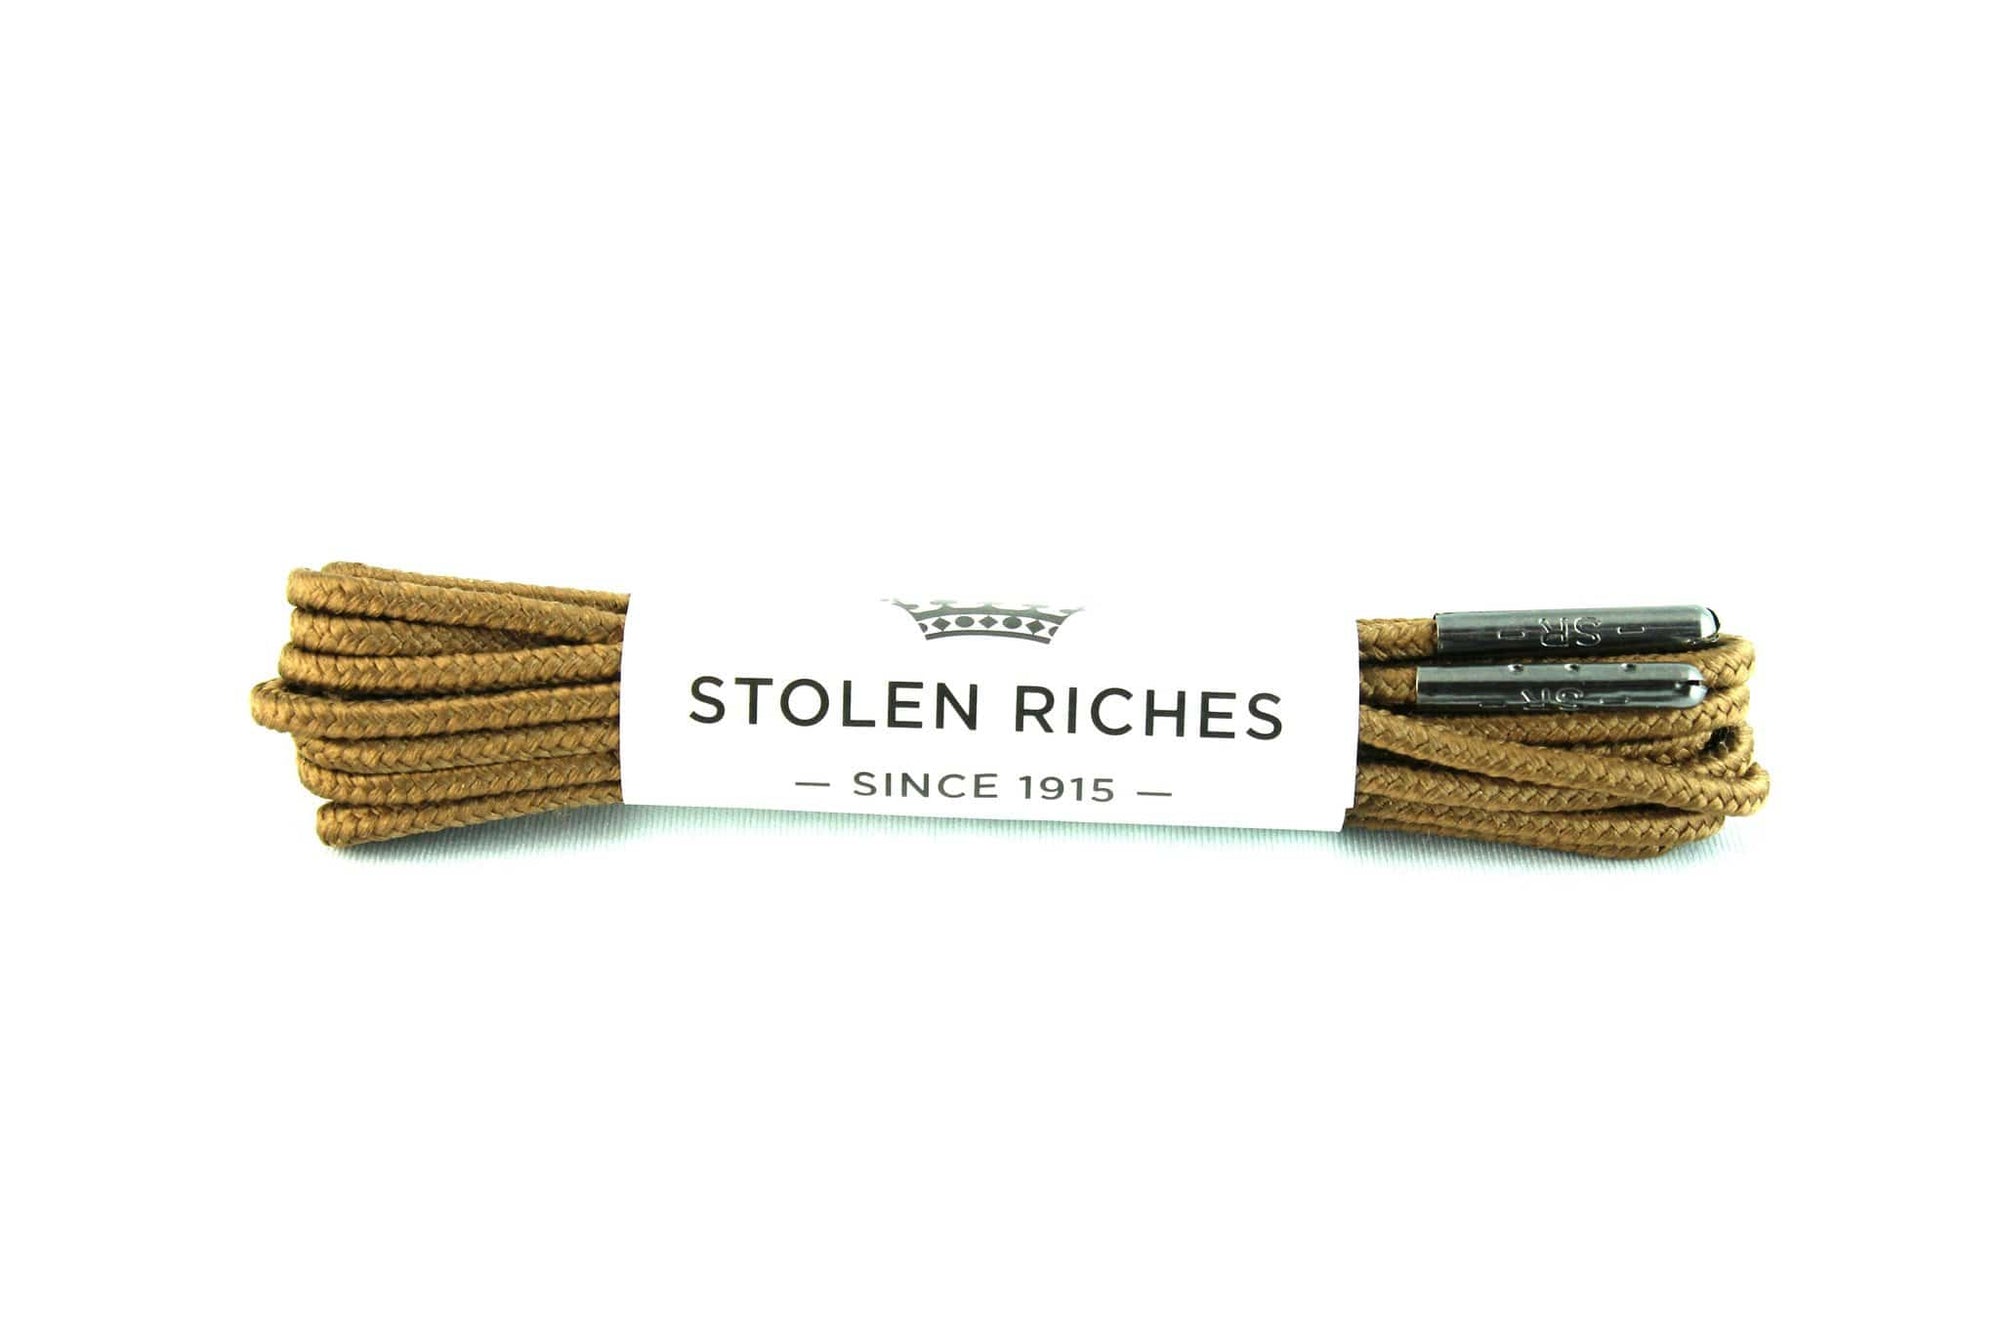 Brown laces for boots (Length: 54"/137cm) - Stolen Riches